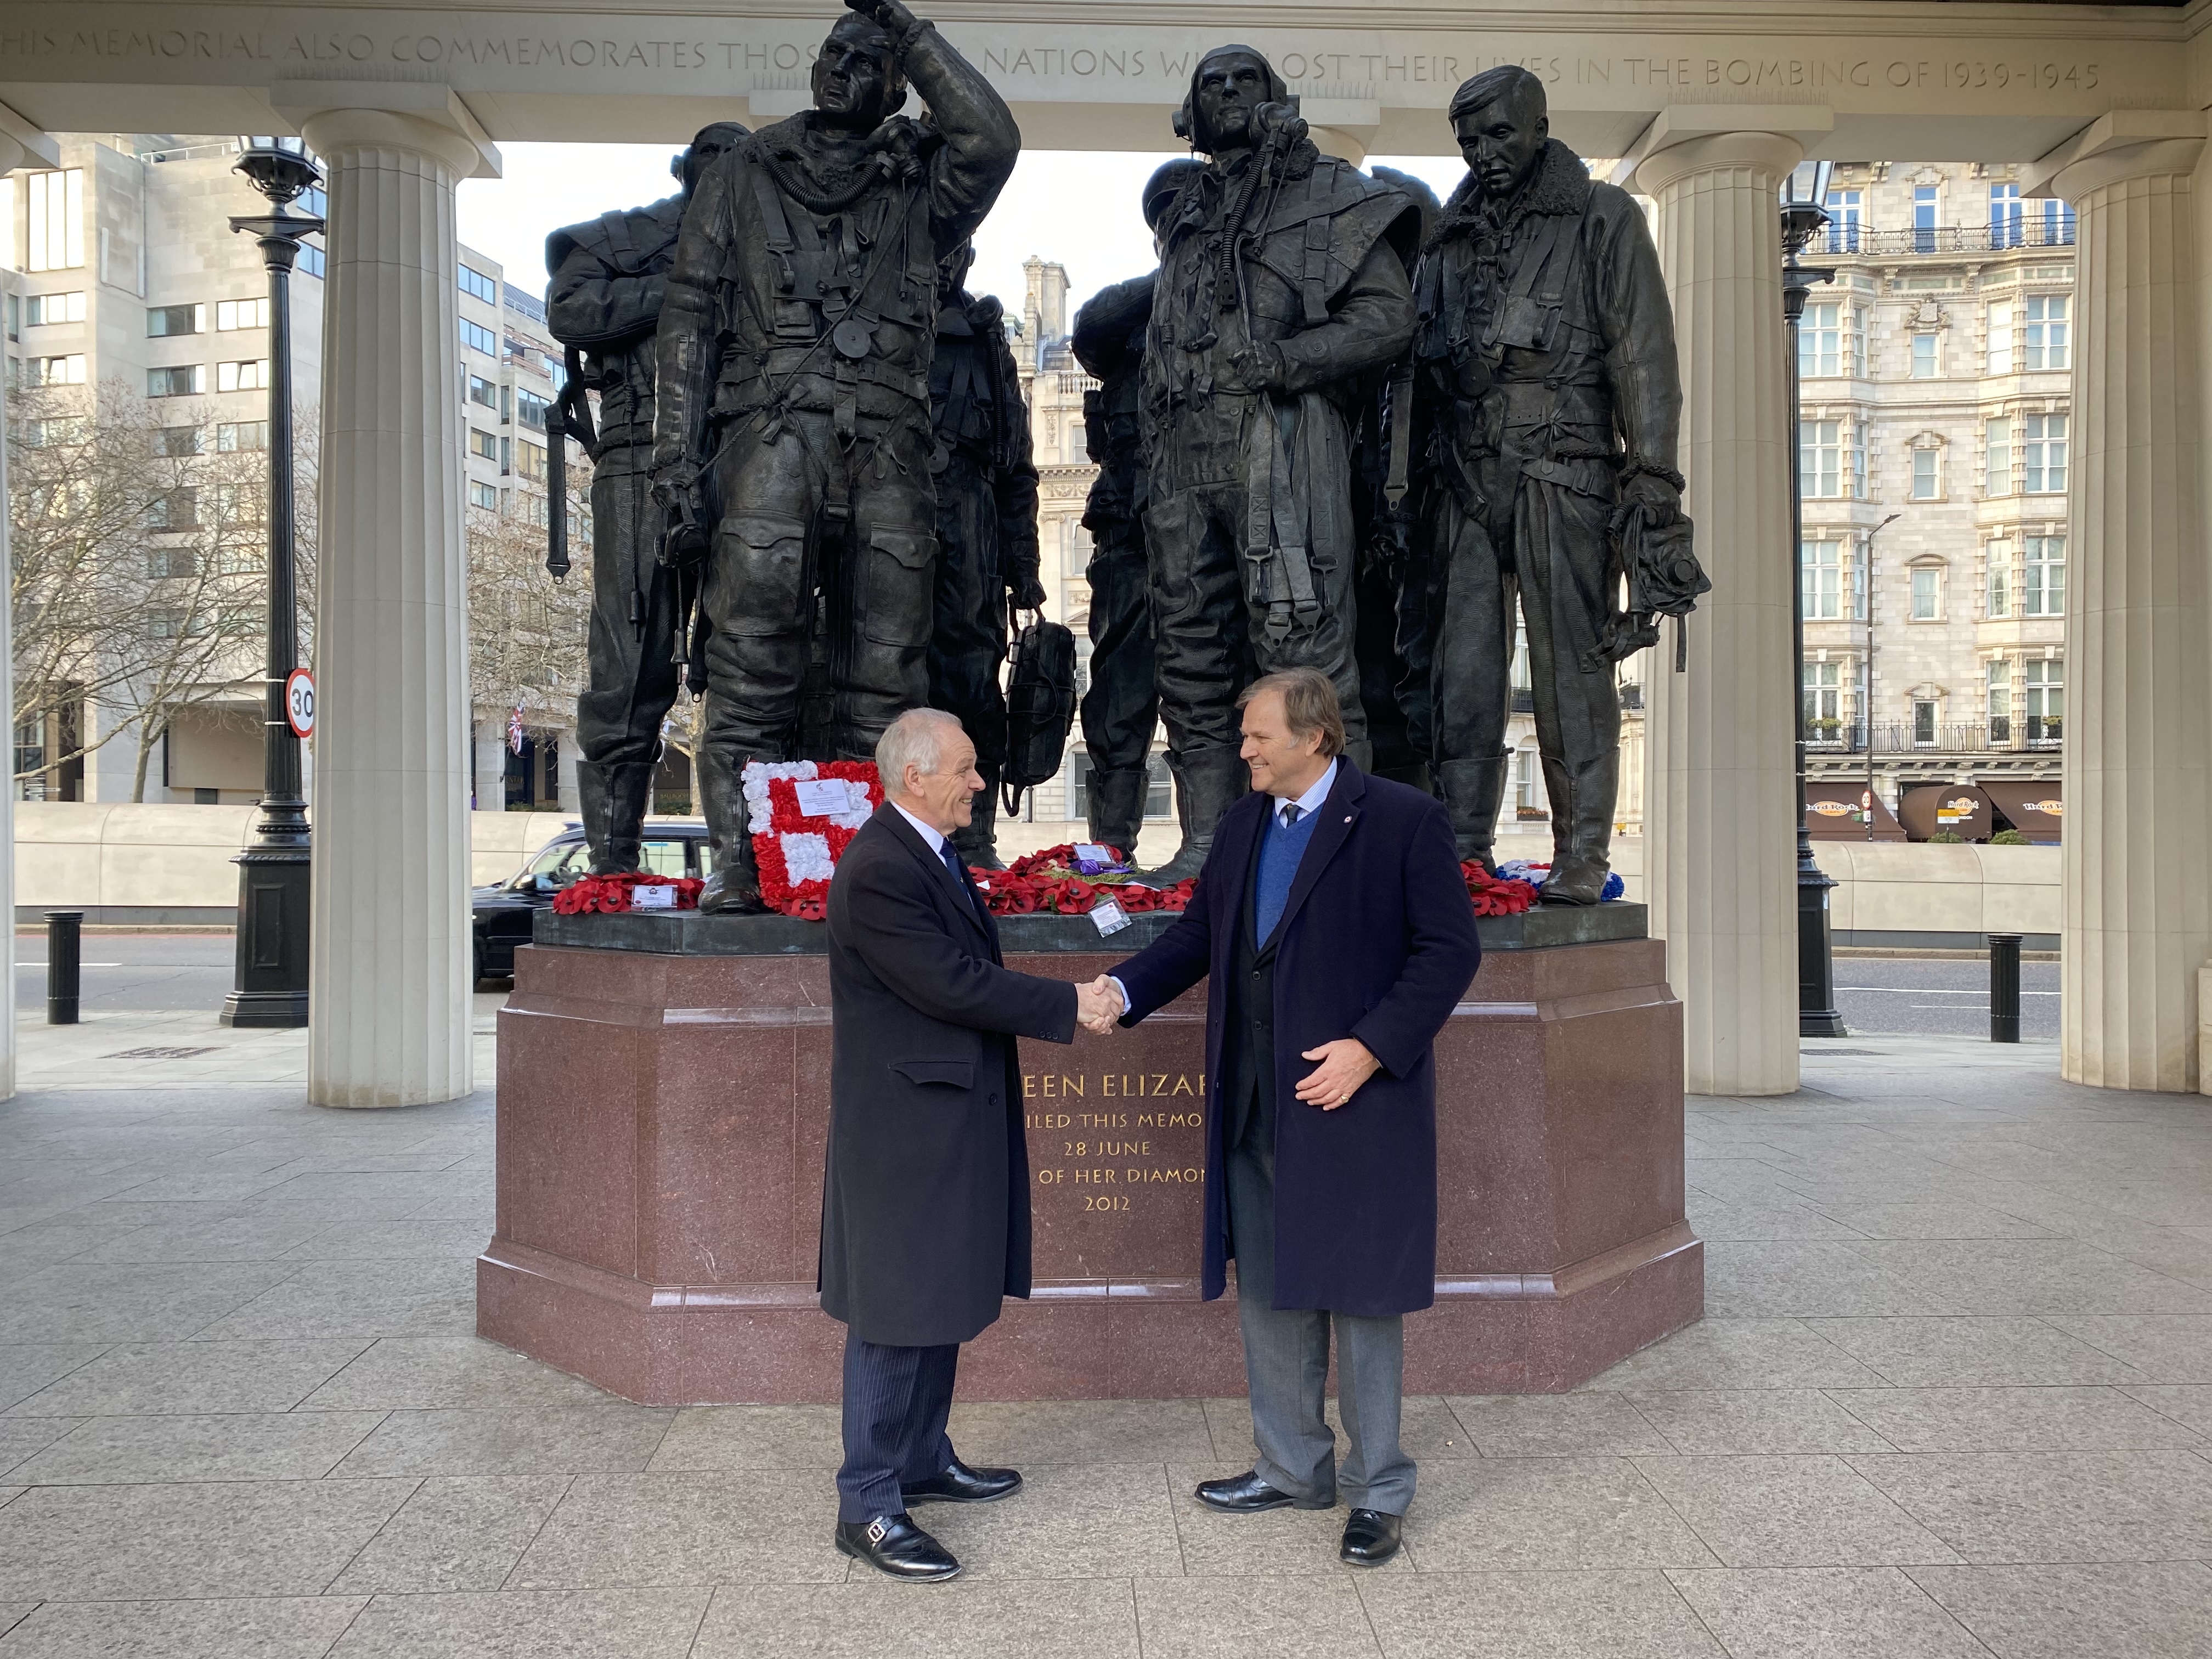  Lawrie Haynes and Richard Daniel shake hands outside a memorial statue.